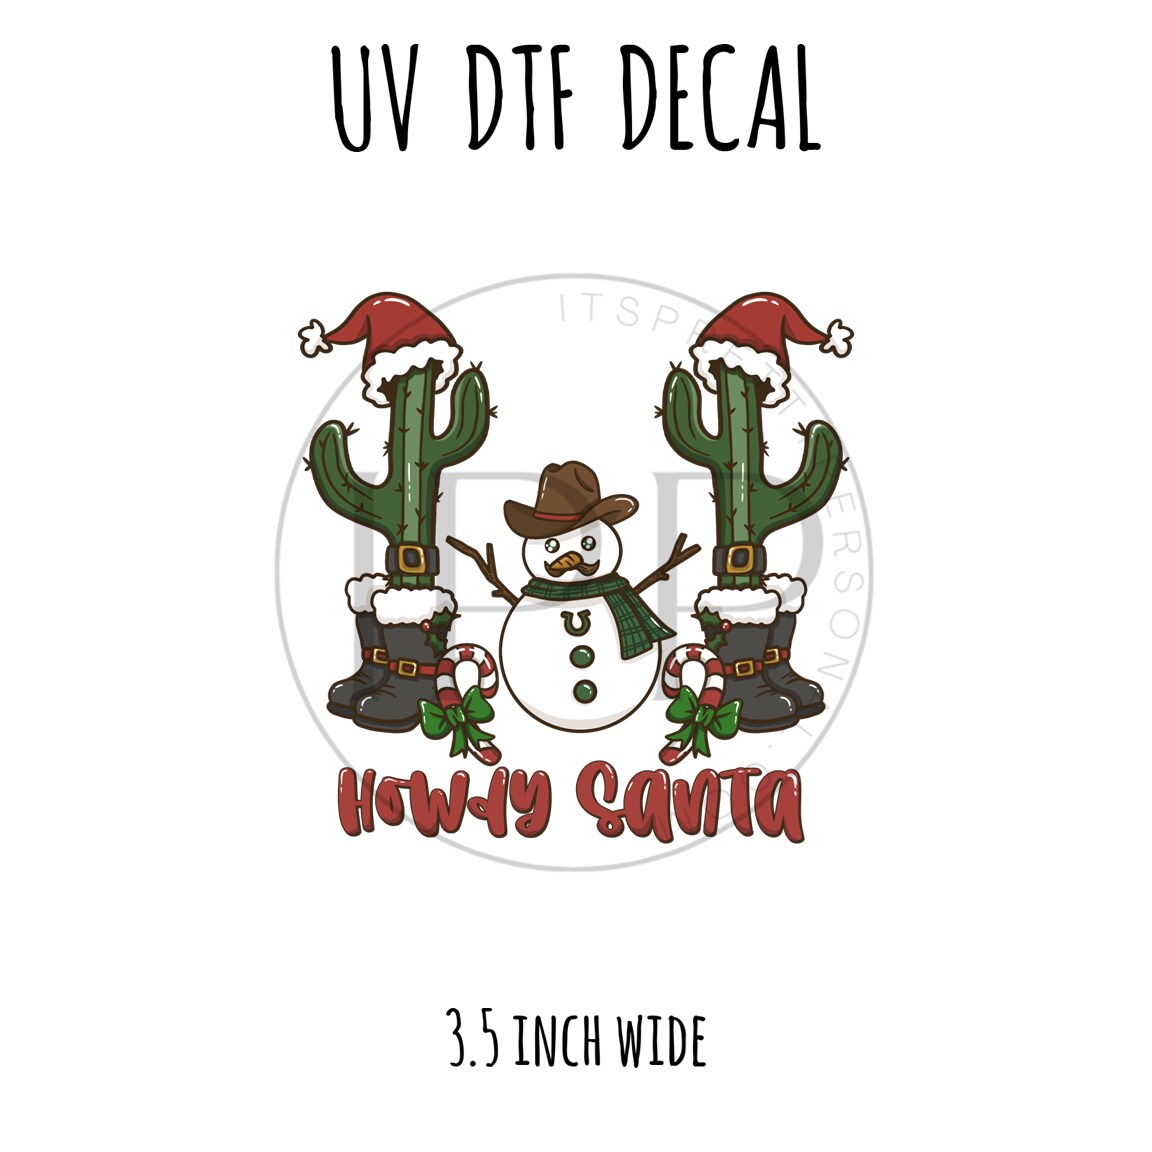 #209- Howdy Santa - 3.5 inch wide UV DTF decal